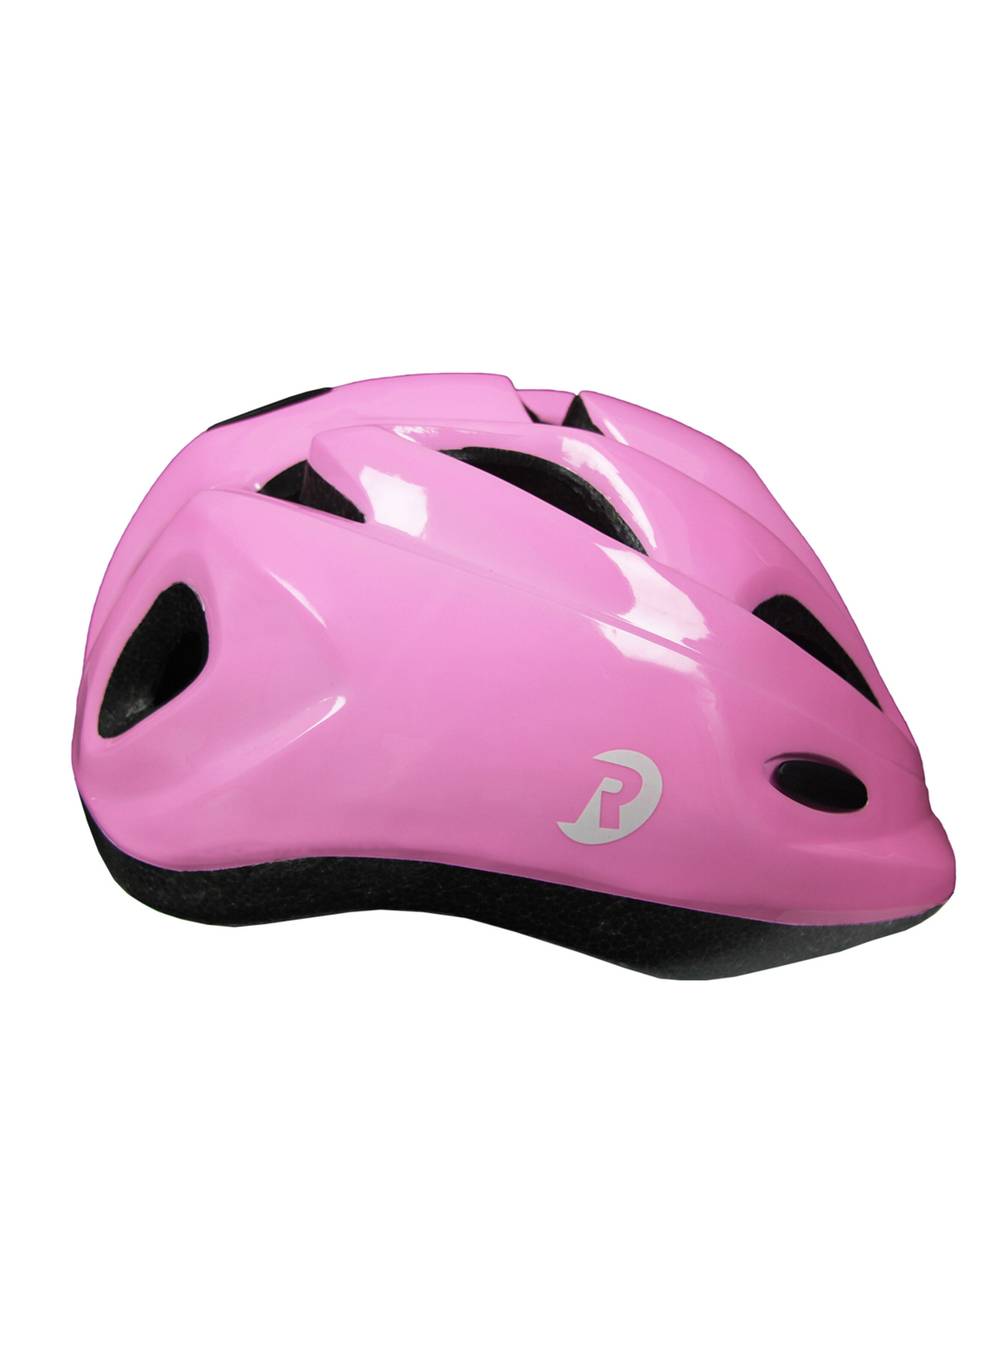 Radost casco ciclismo infantil (color: rosa)